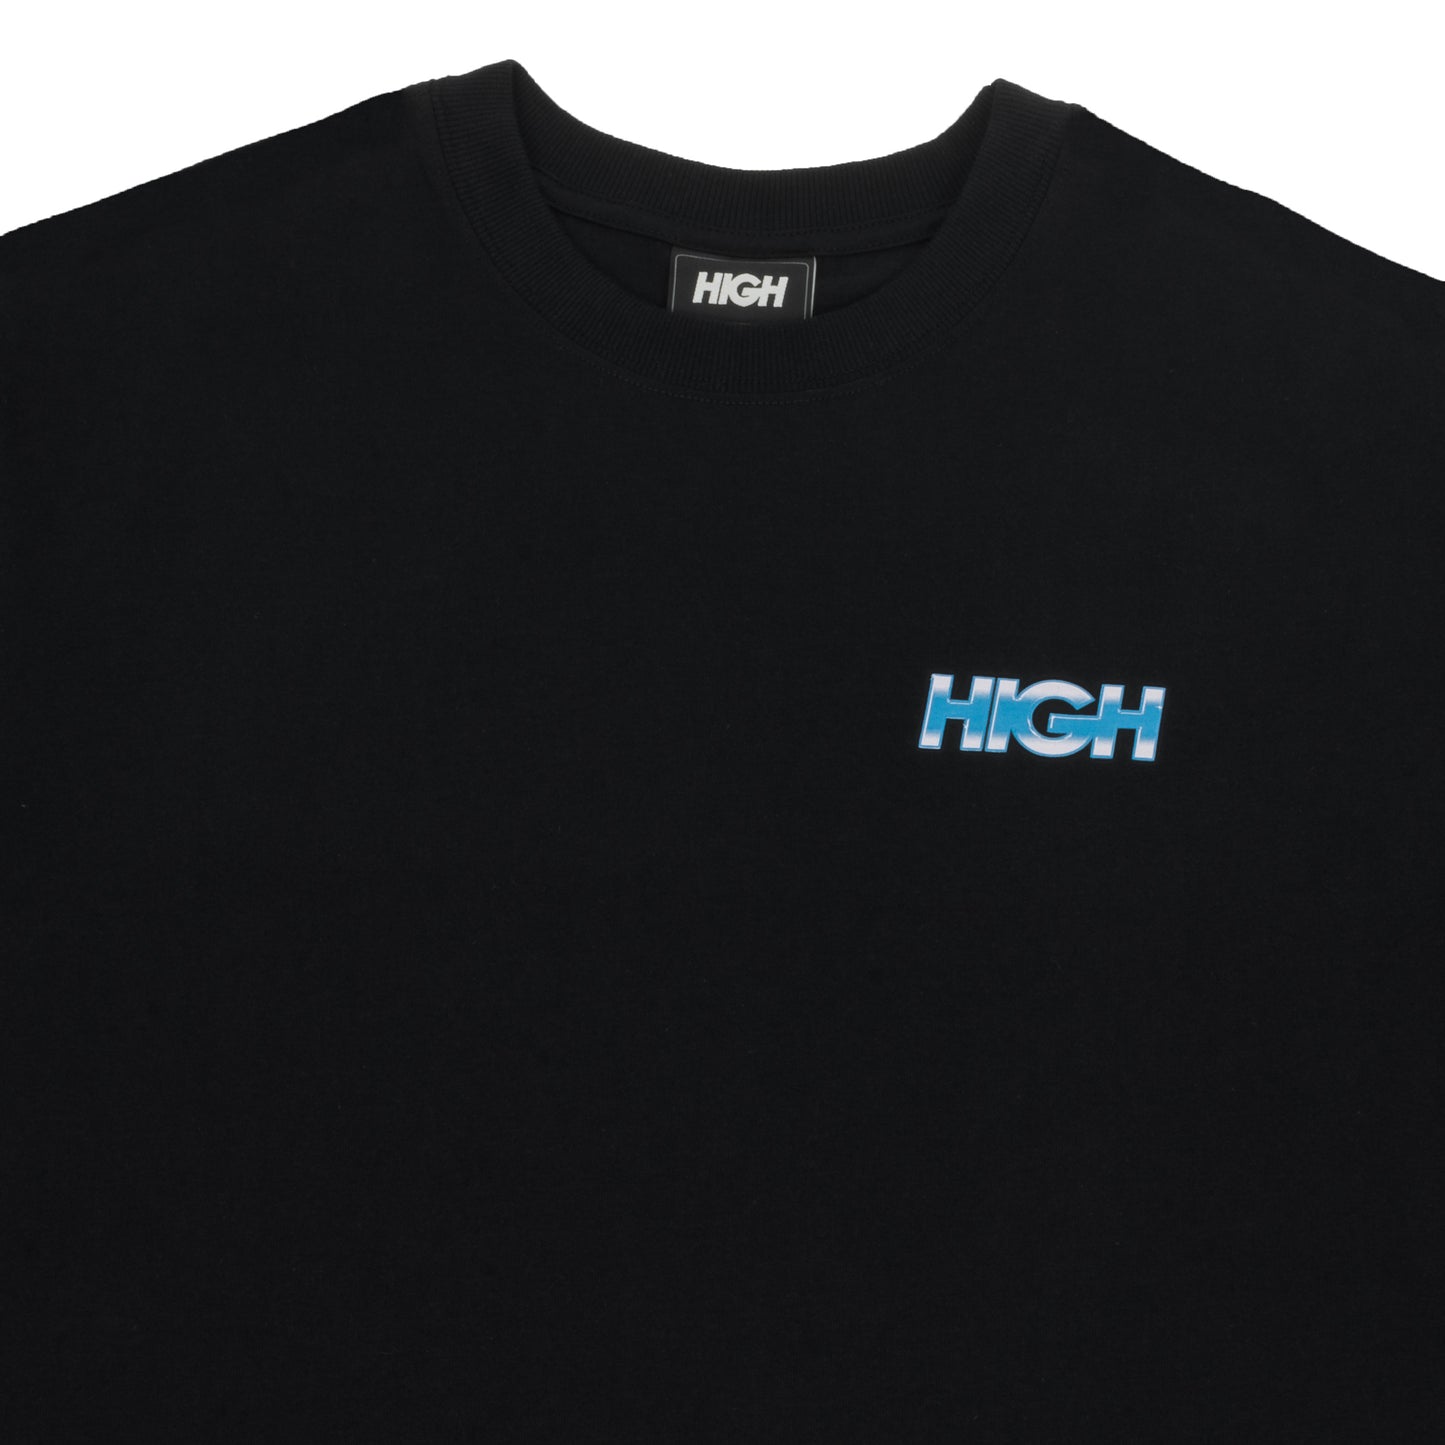 HIGH - Camiseta Engine "Black" - THE GAME